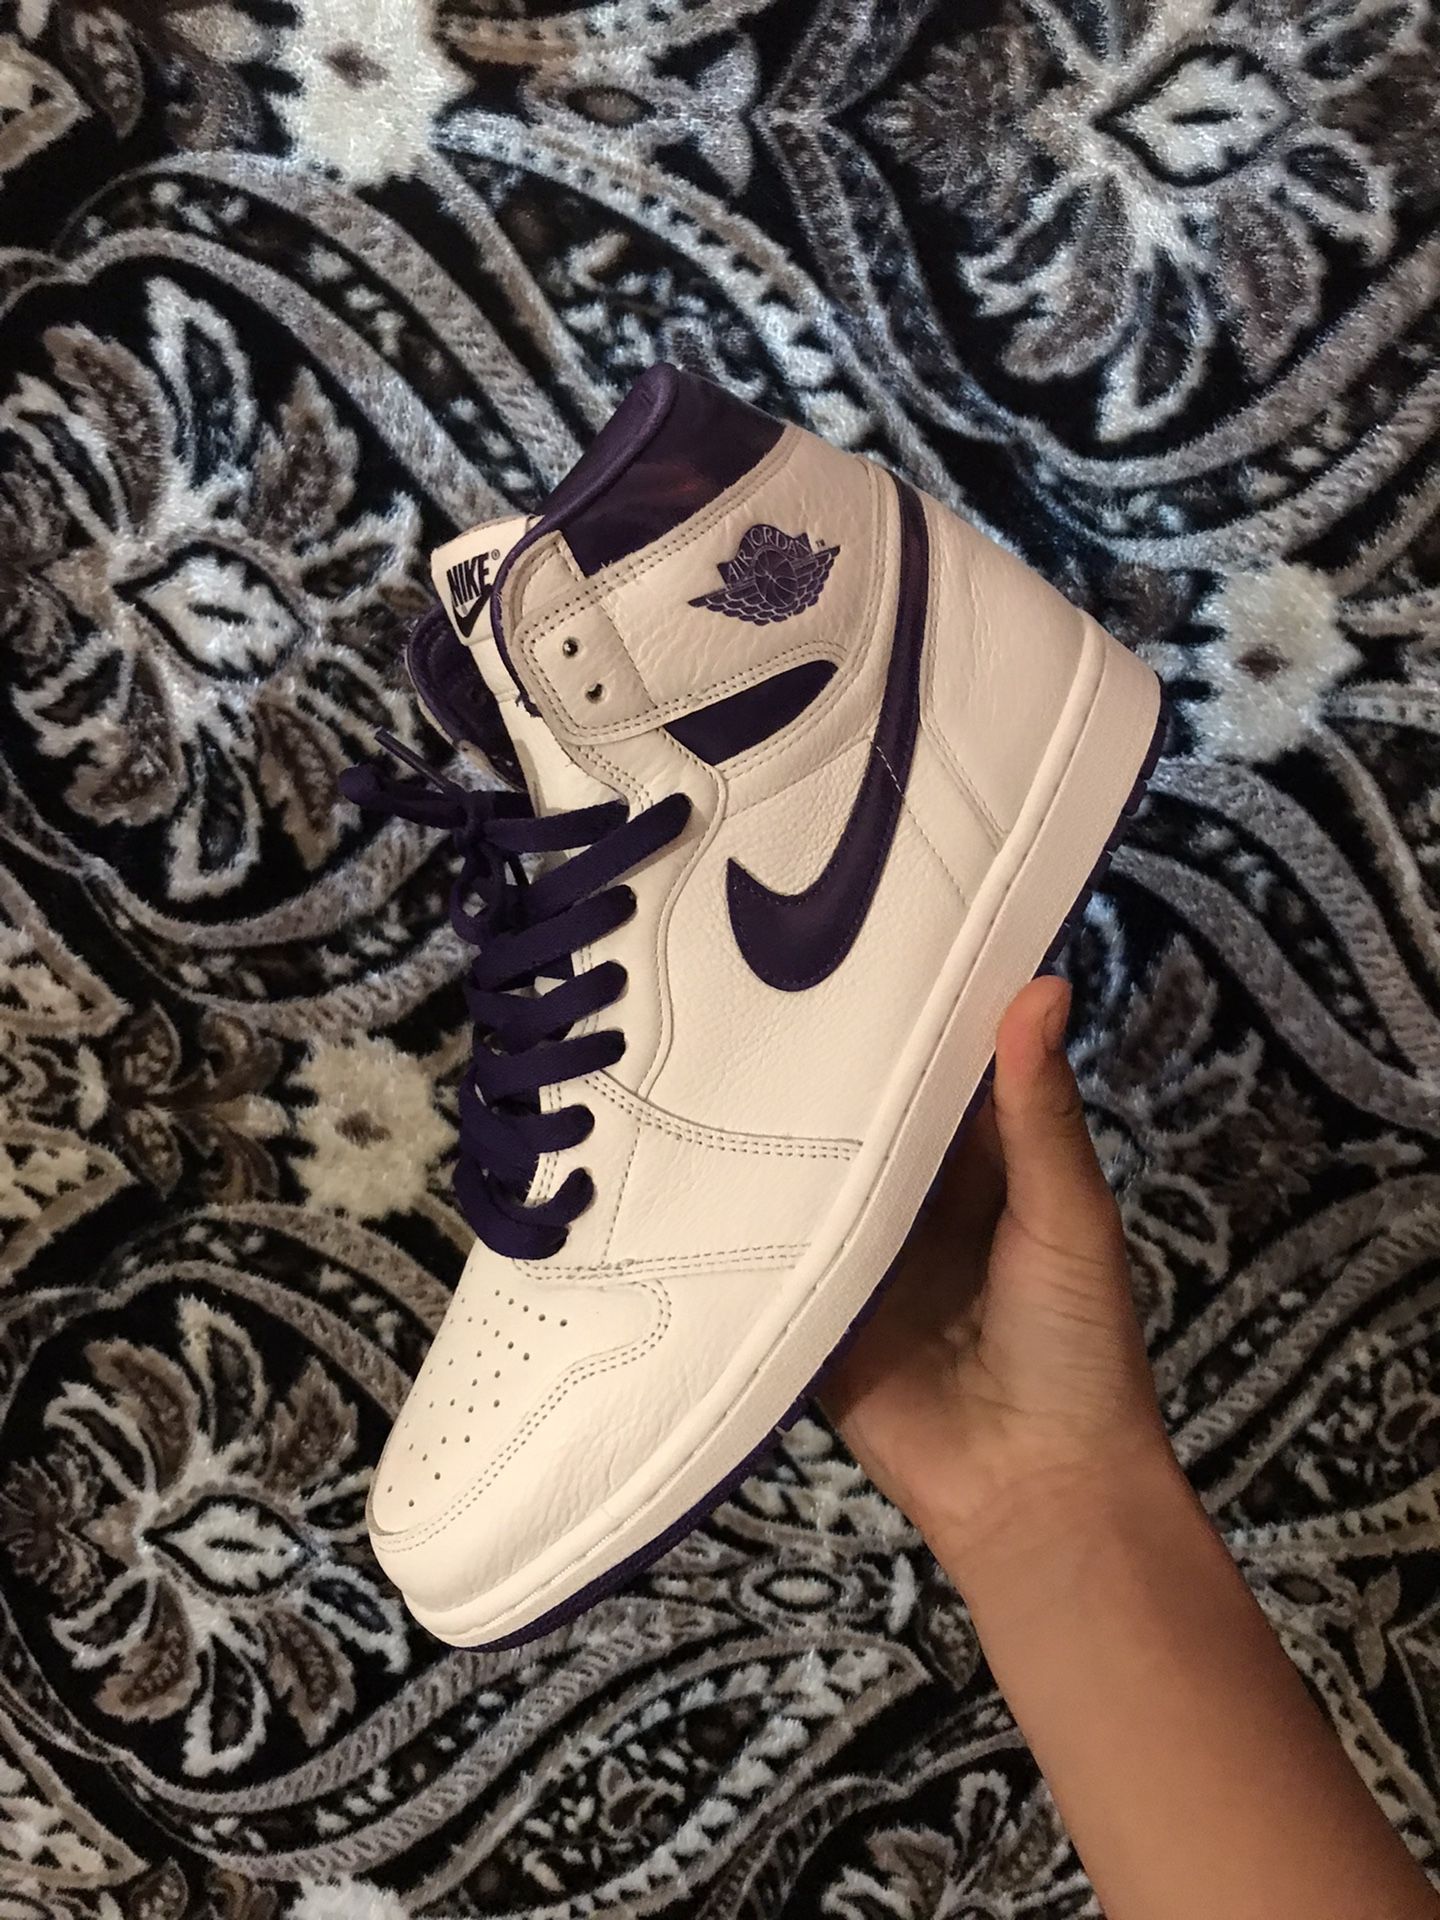 Jordan 1 “Court purple”